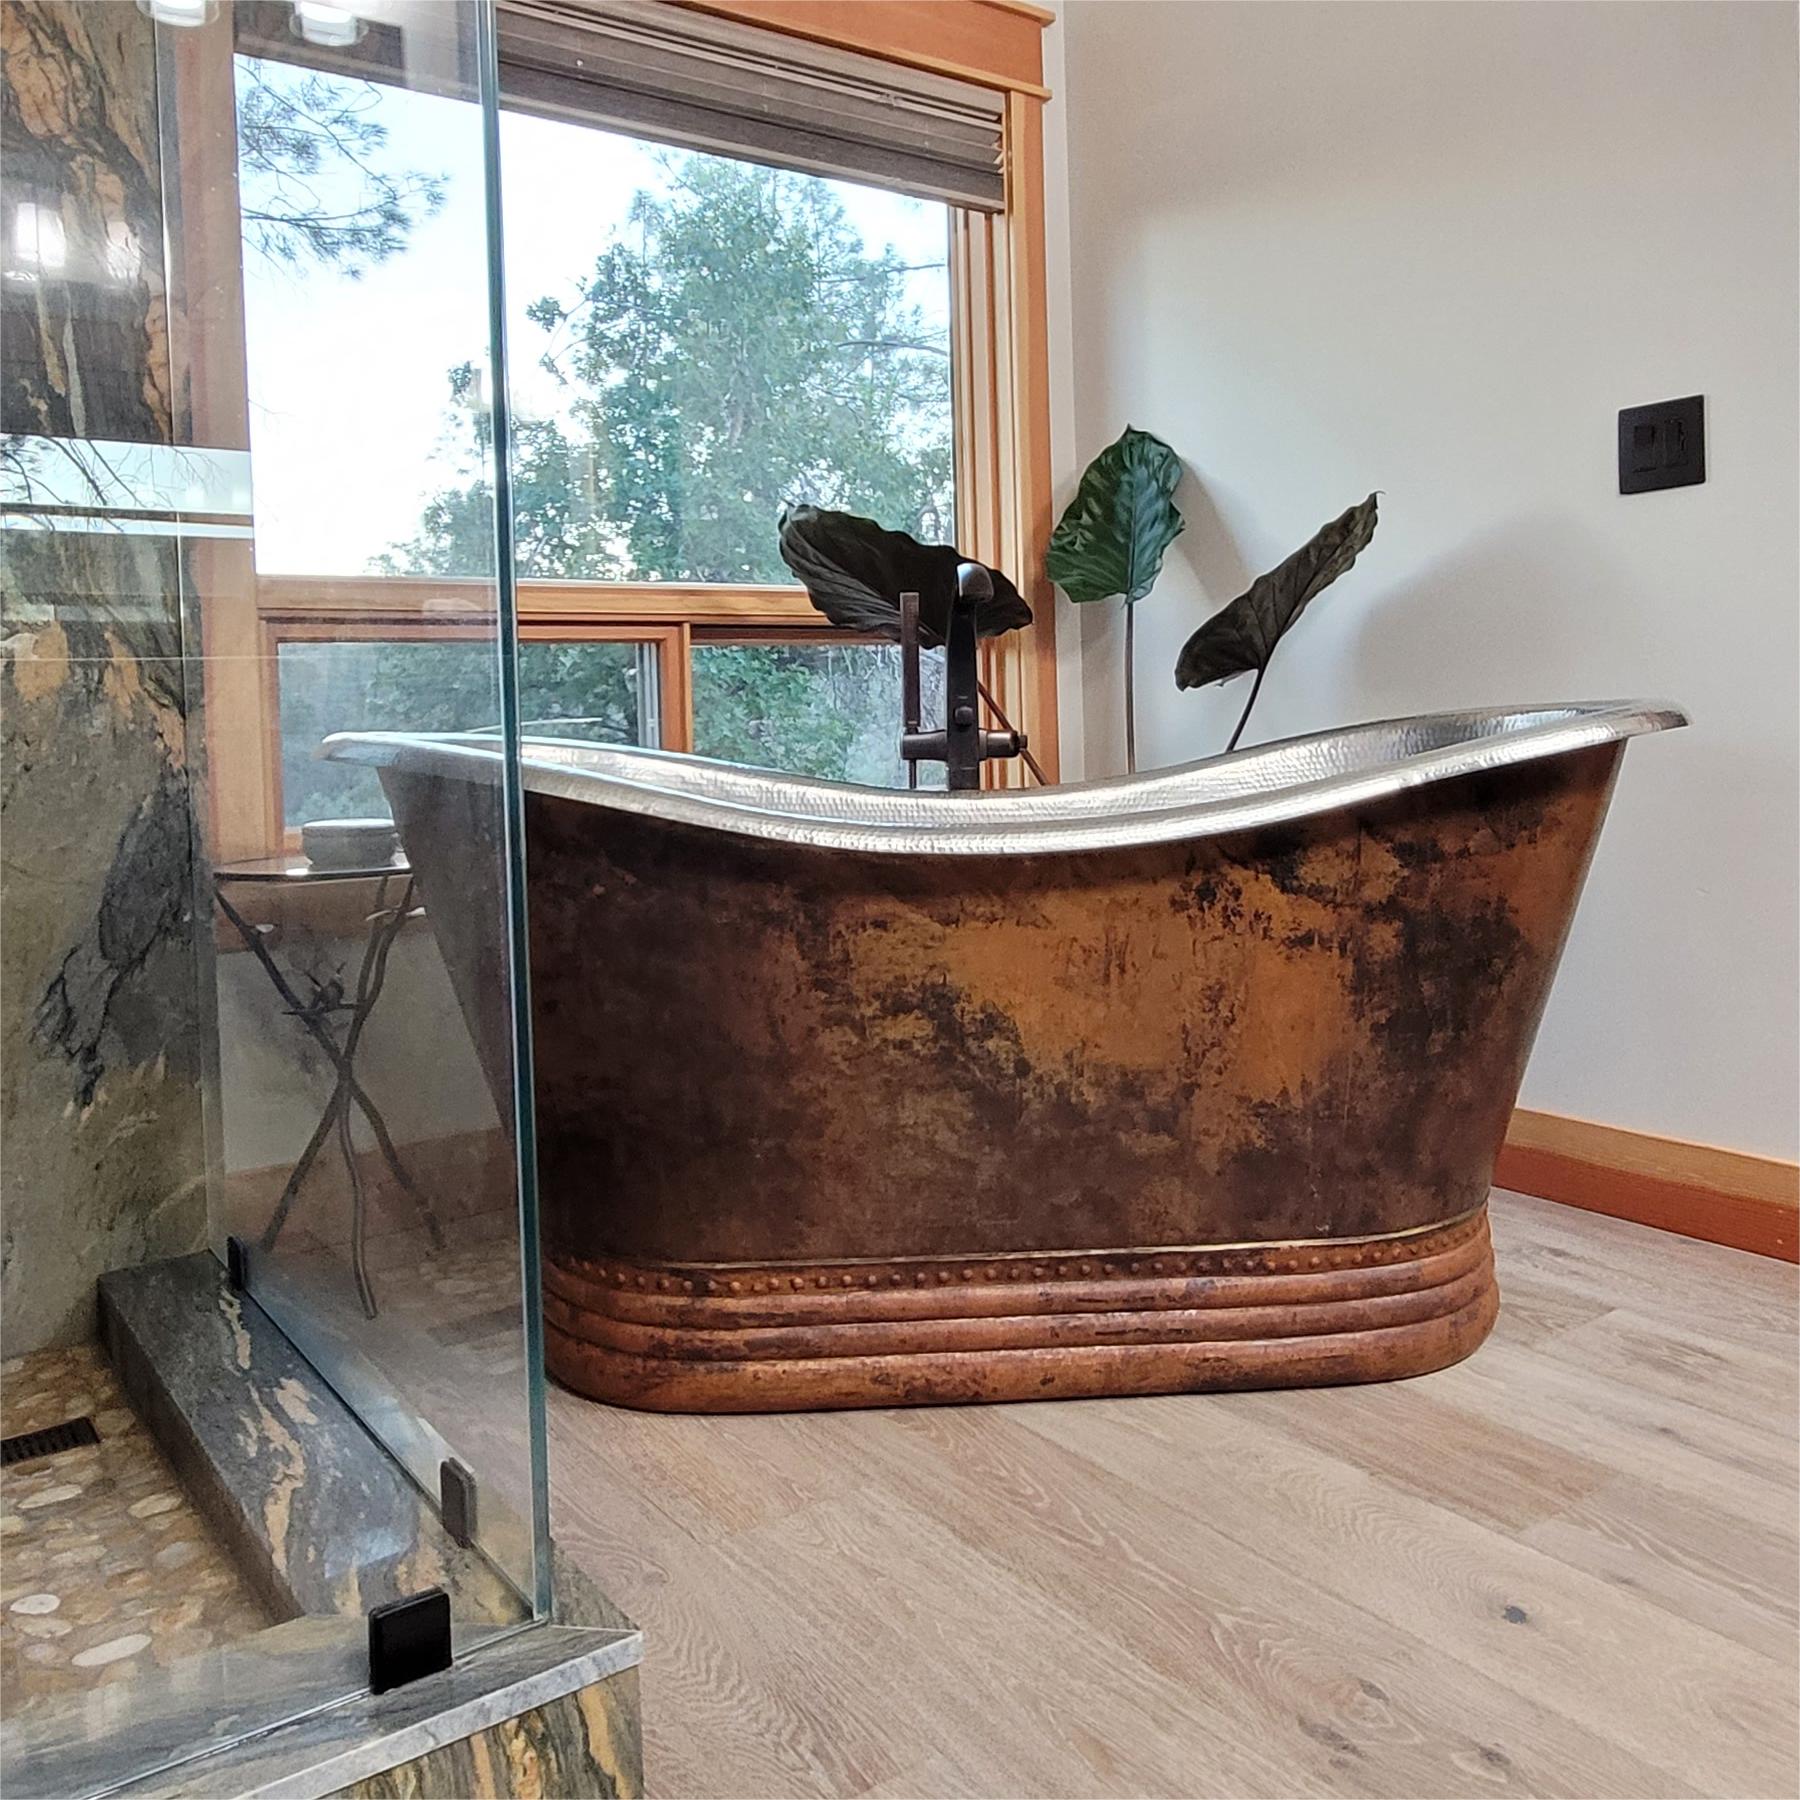 Fobest custom fired copper bathtub 